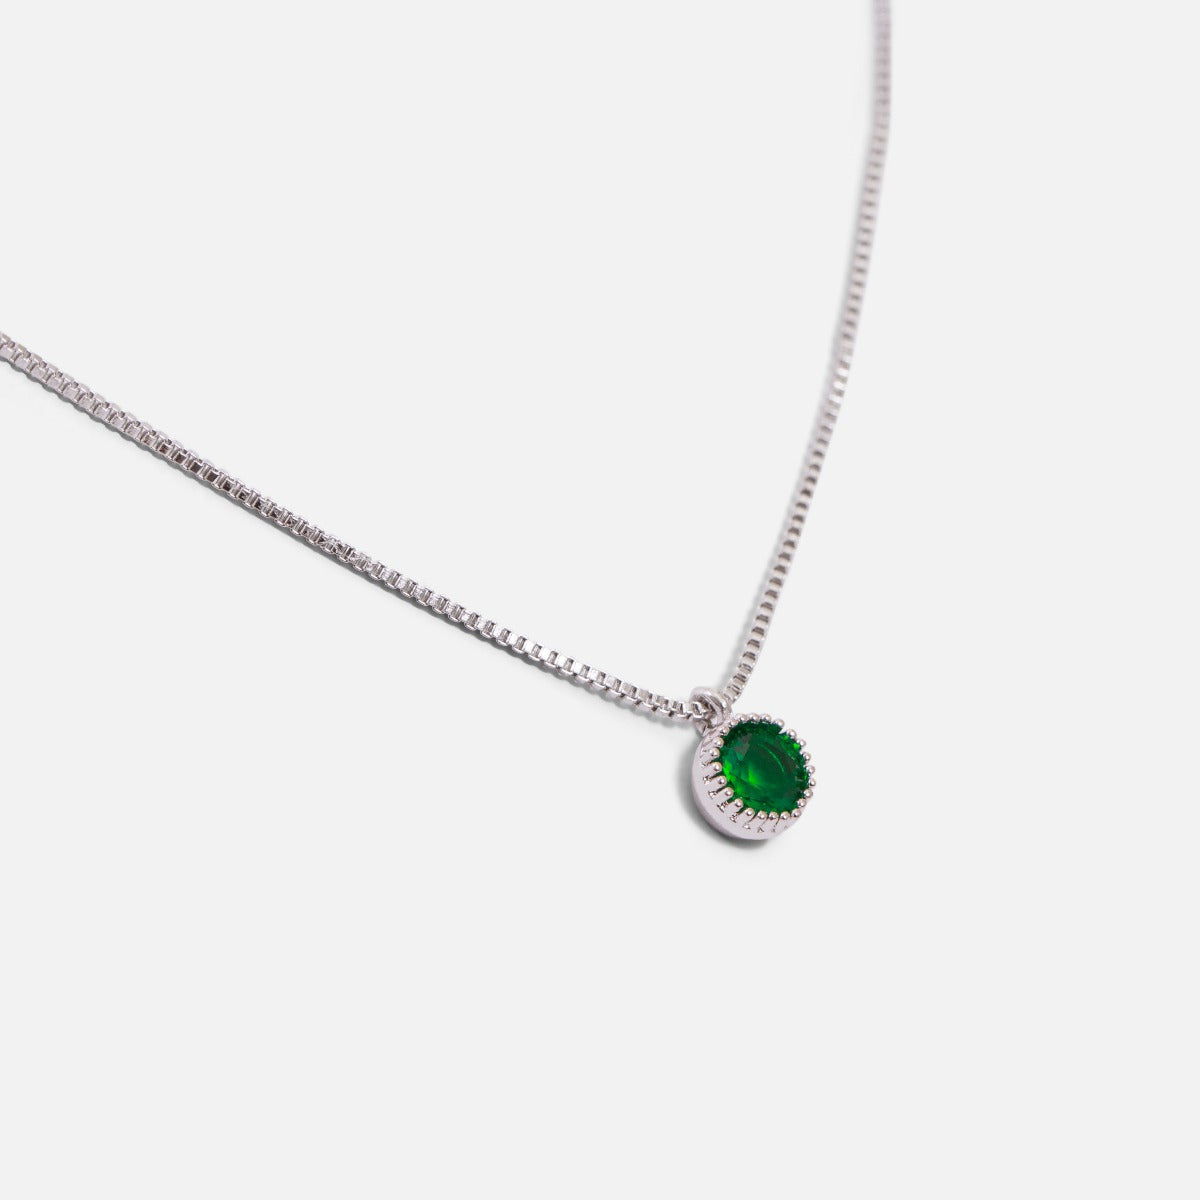 Silvered pendant birthstone " emerald stone "